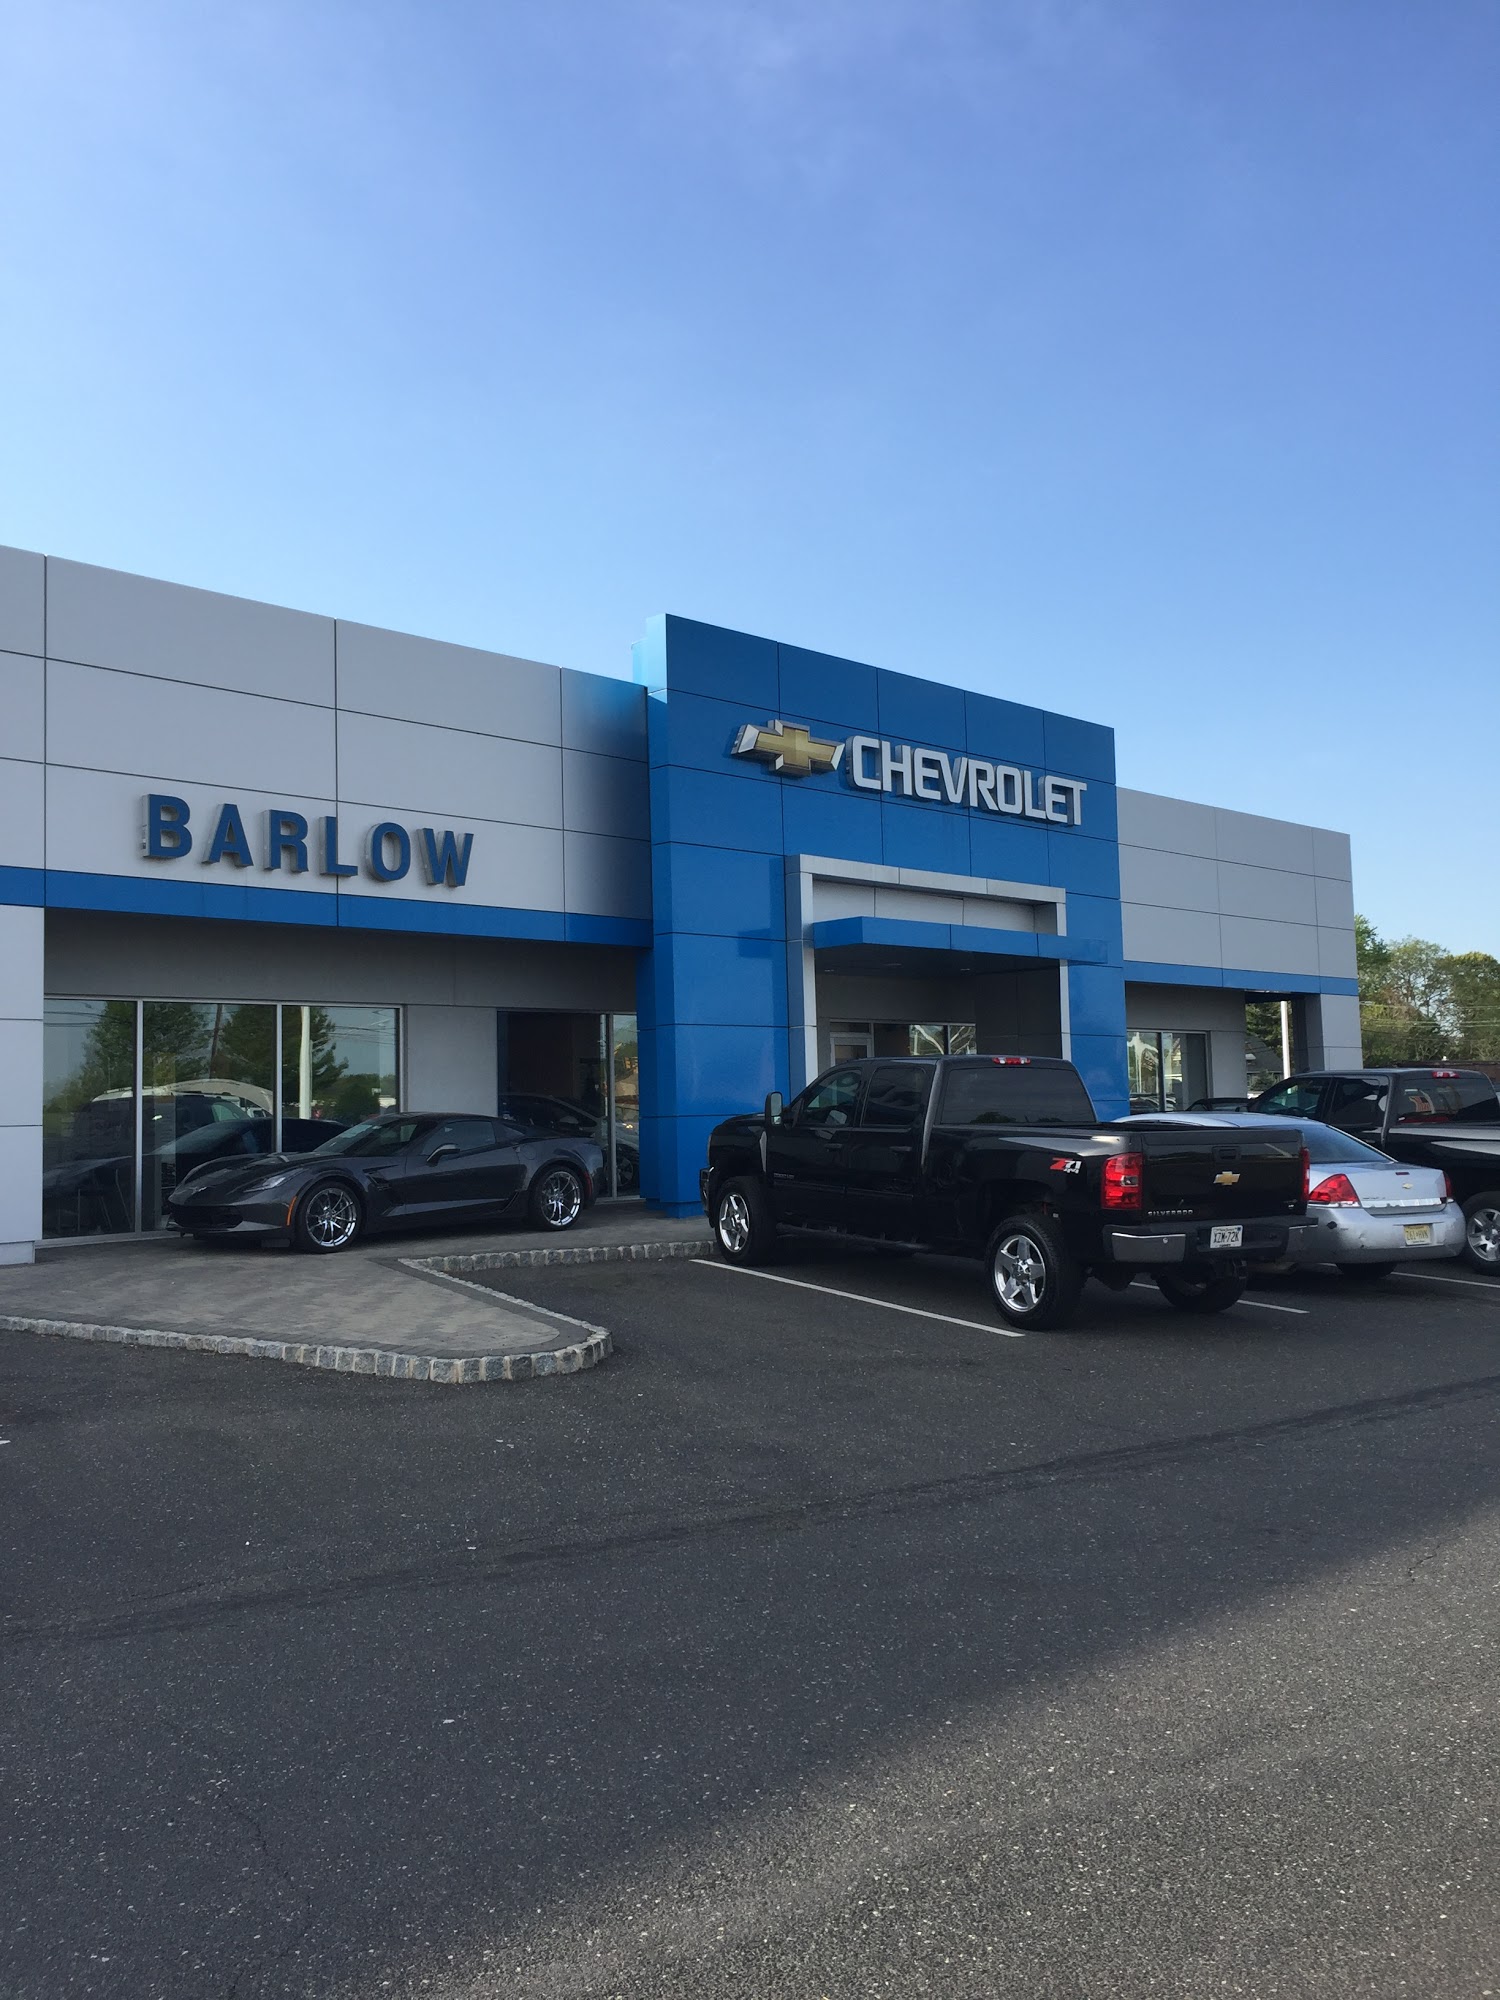 Barlow Chevrolet